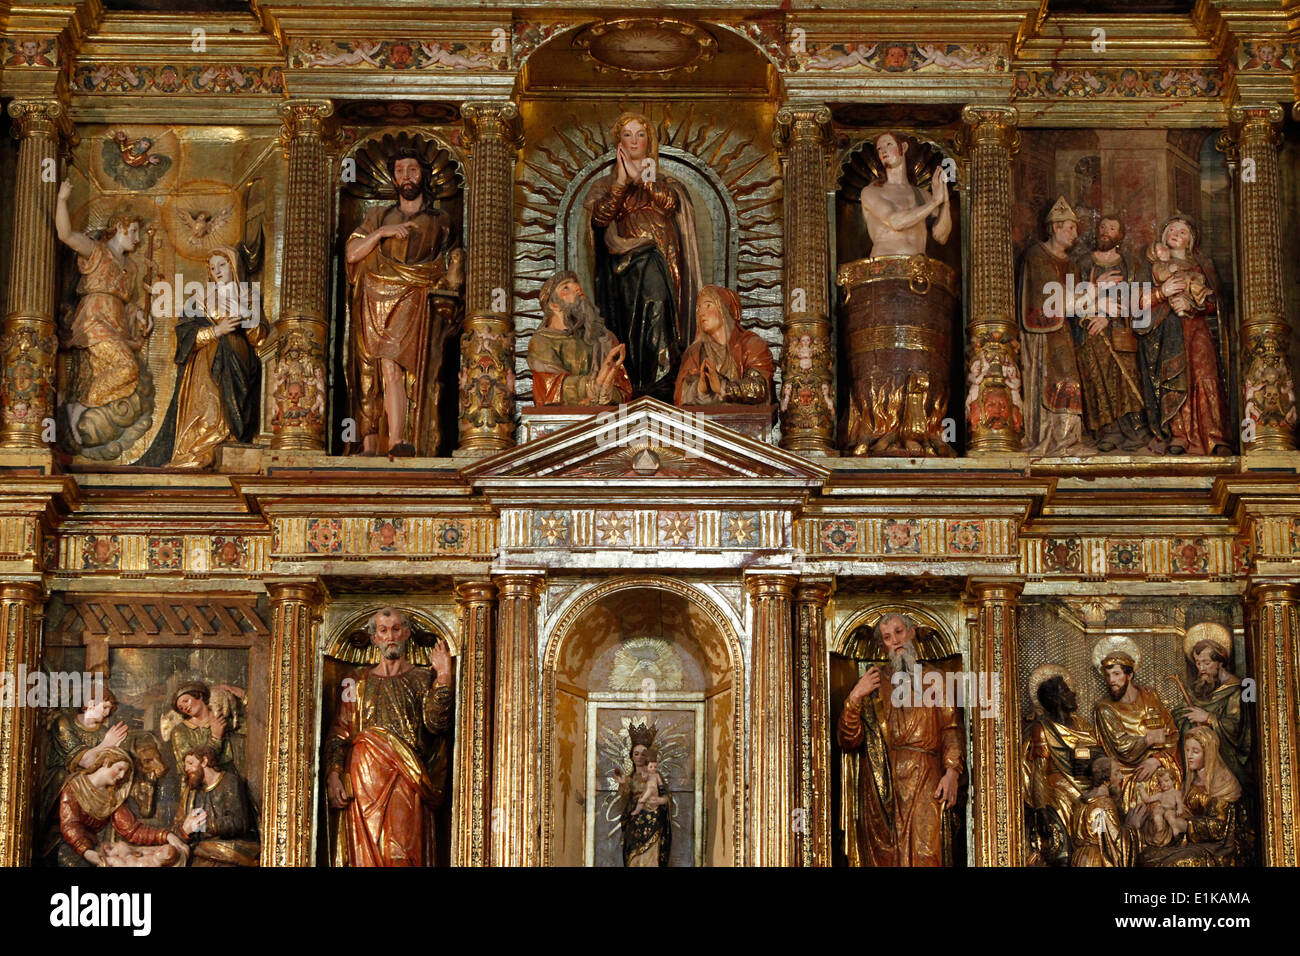 Real monasterio de San Jeronimo - church reredos detail Stock Photo